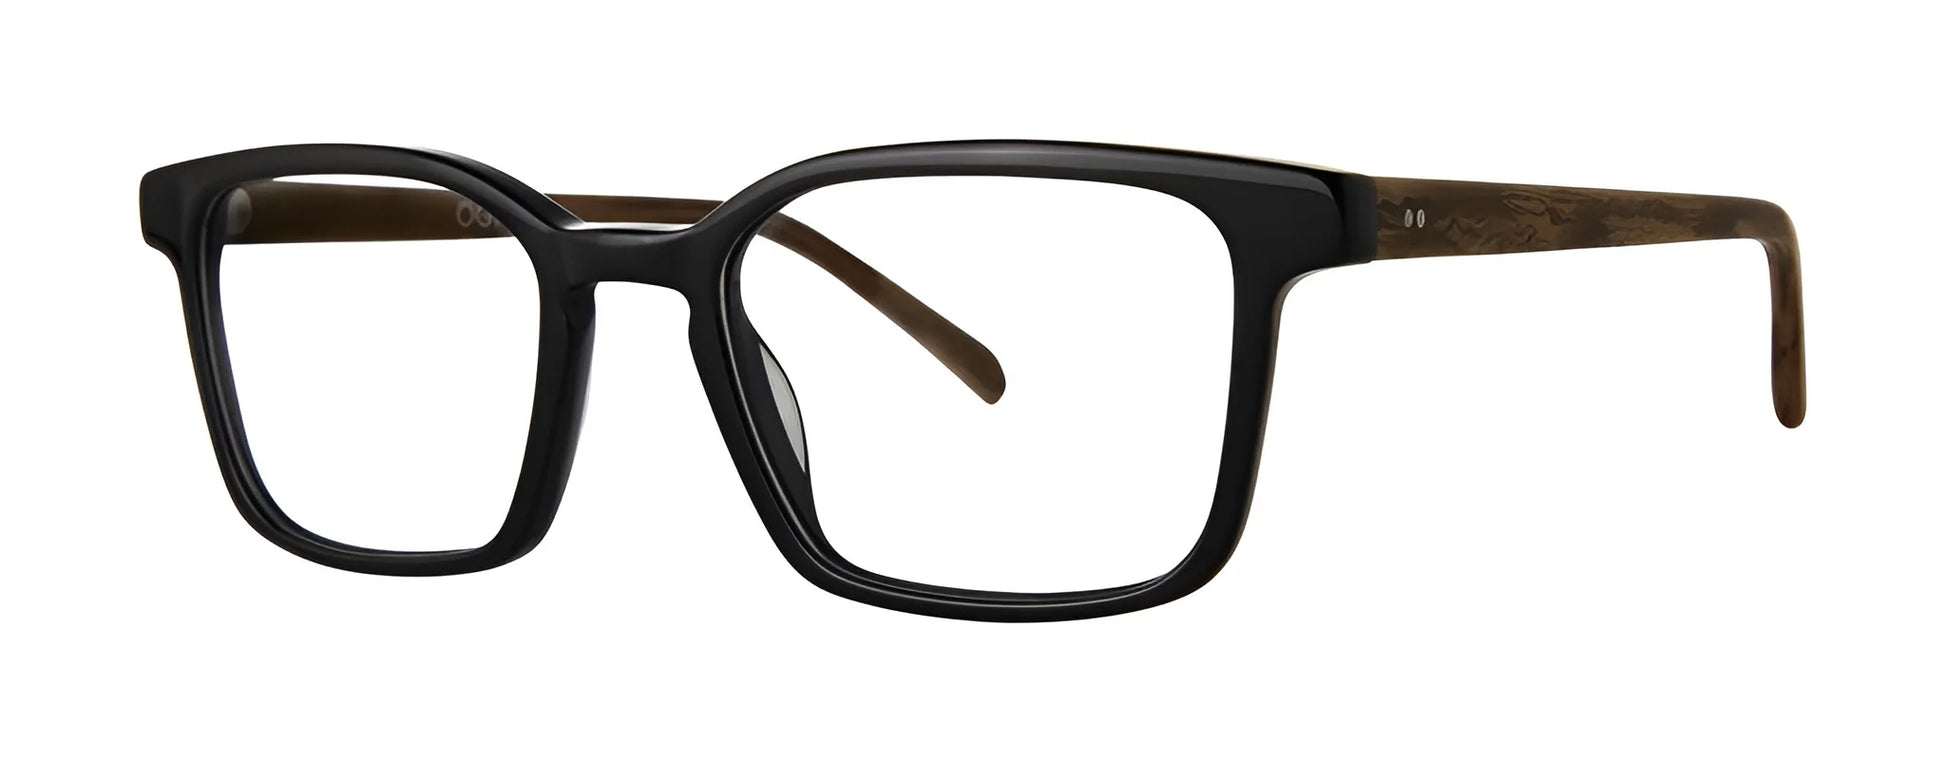 OGI DYLAN Eyeglasses Black / Wood